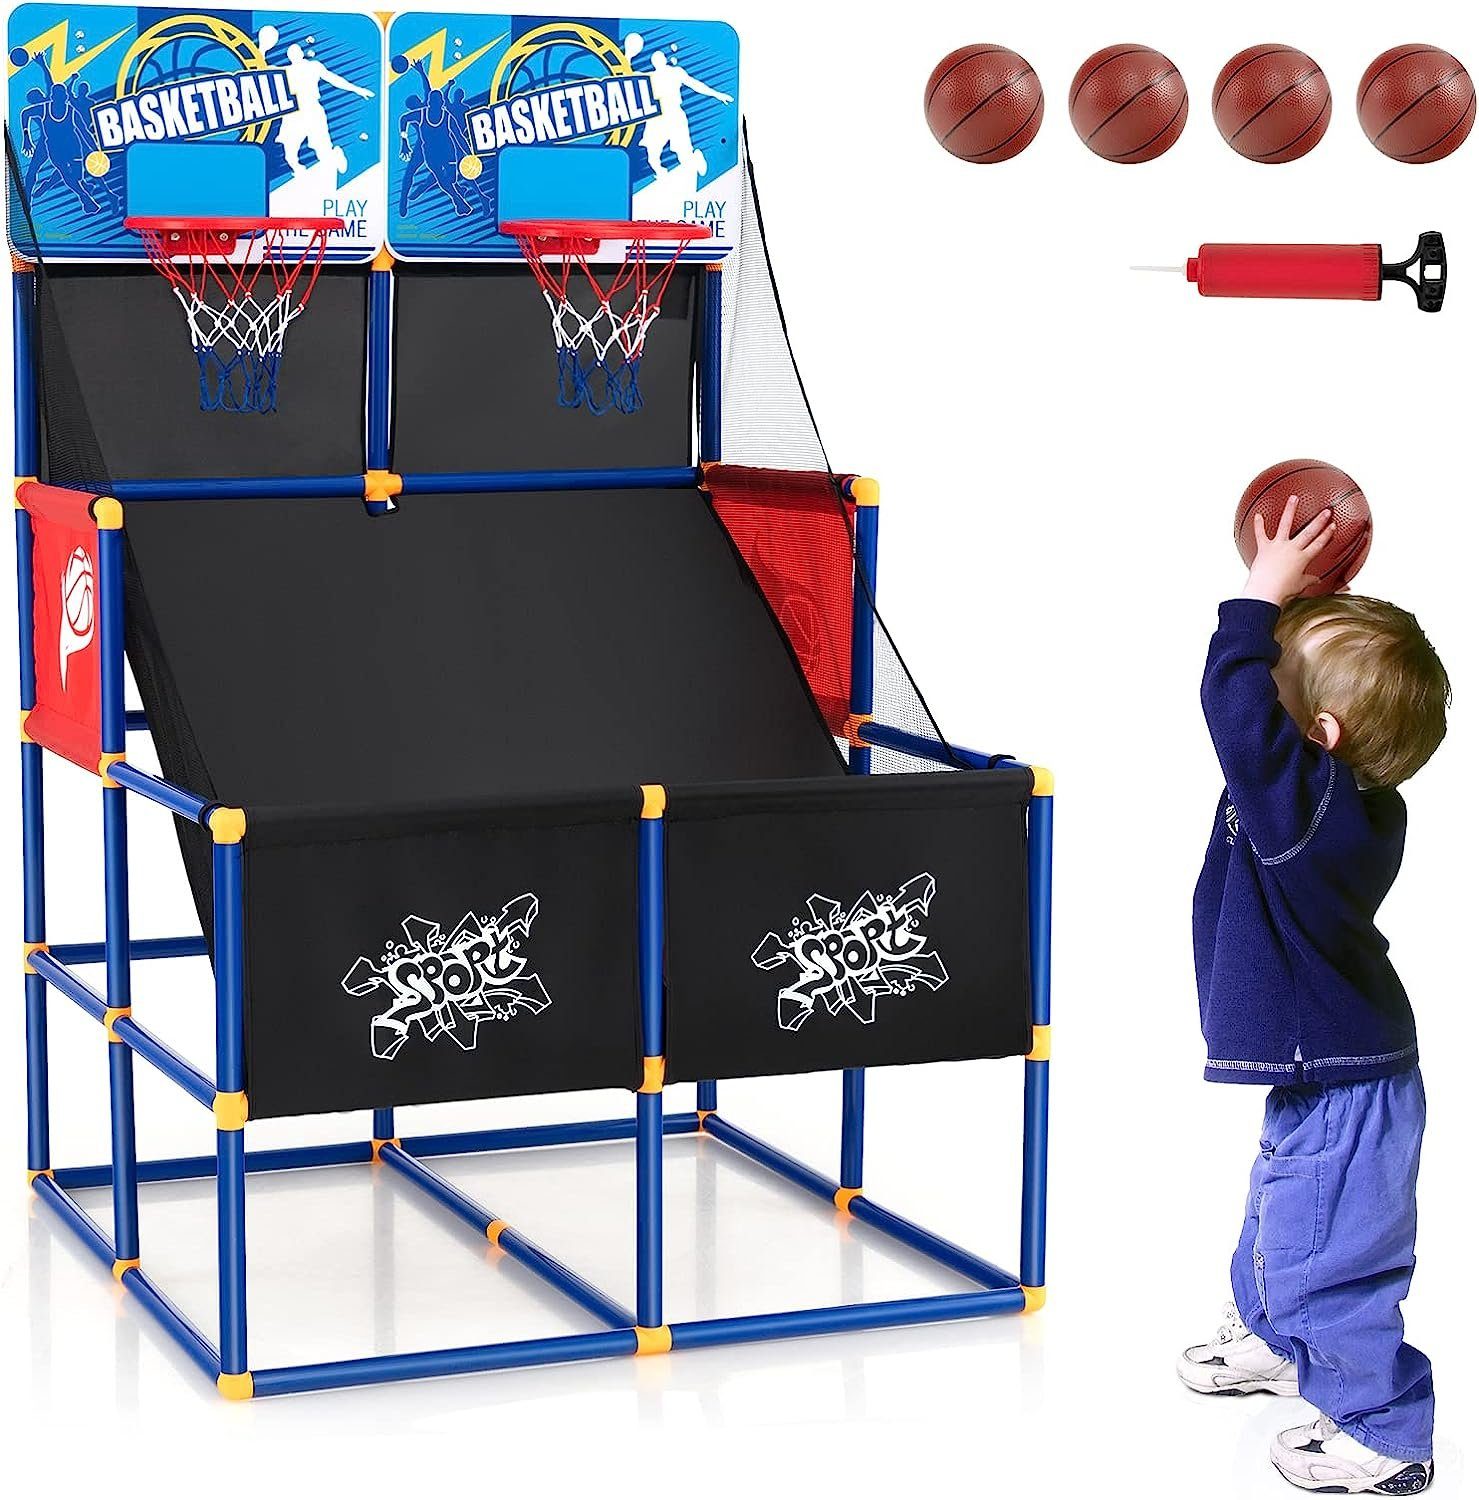 Basketballspiel (Set), Kinder KOMFOTTEU Basketballkorb für